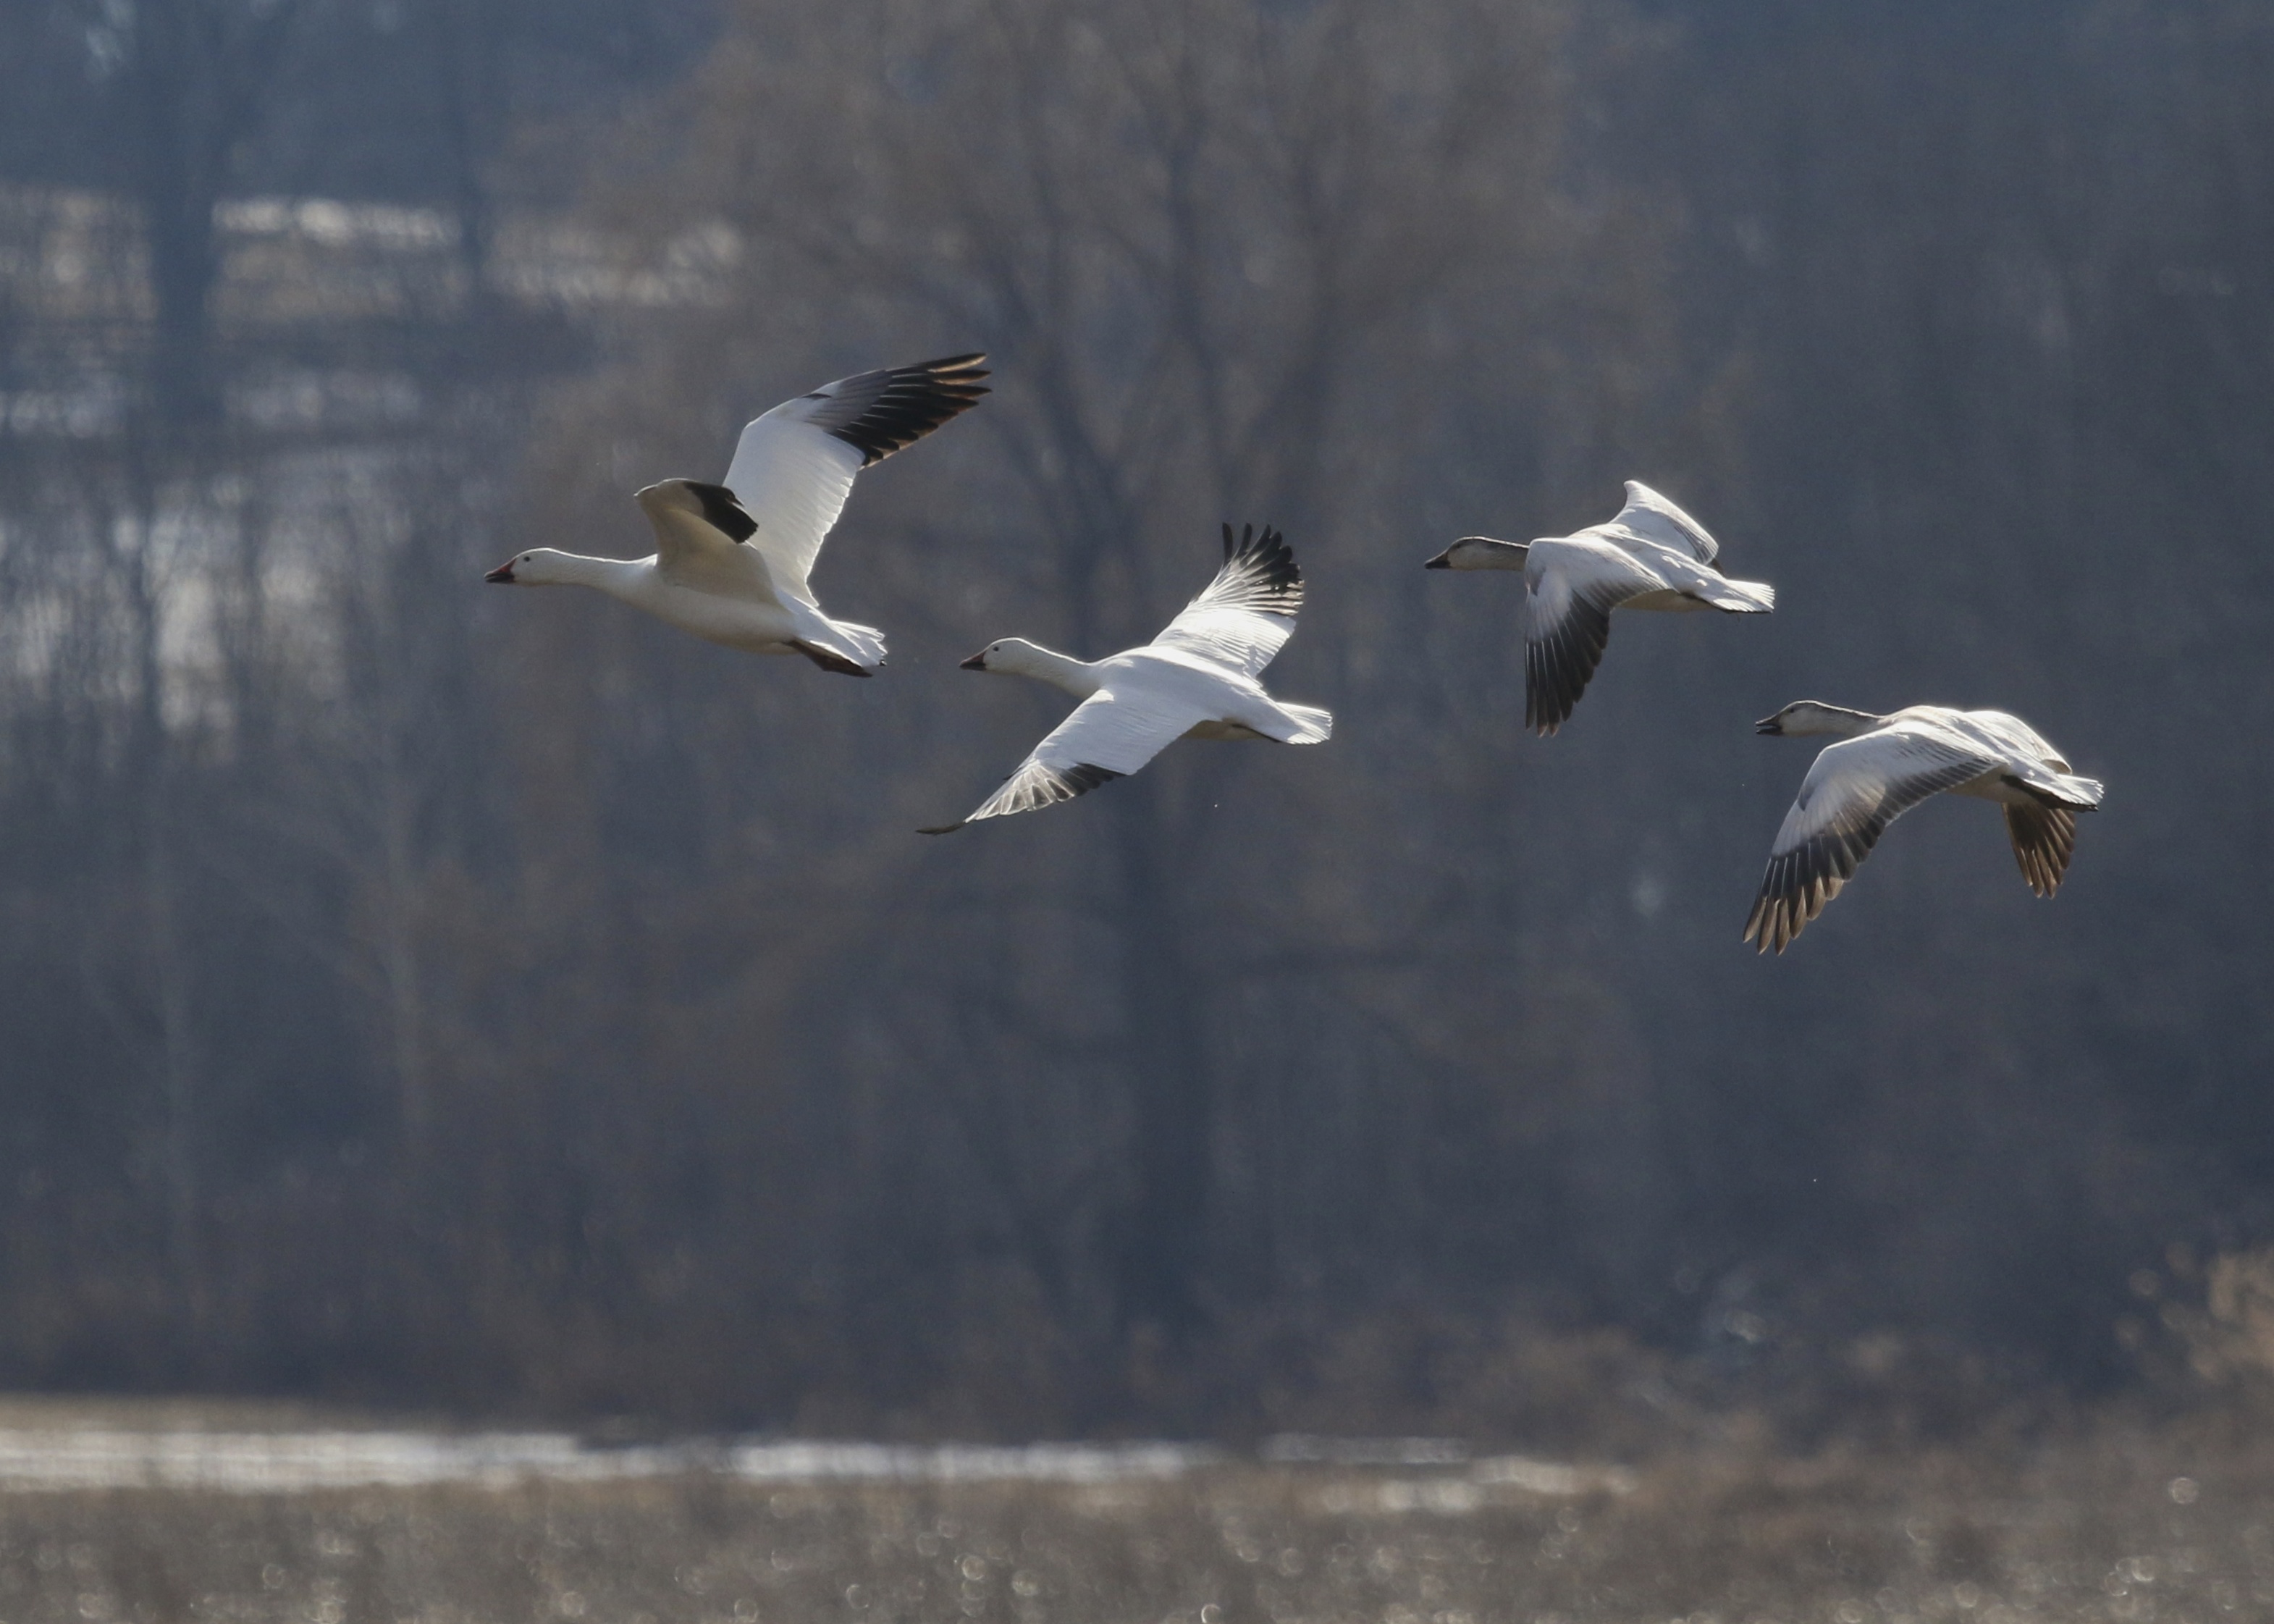 Four Snow Geese in flight, New Hampton NY, 3/20/14.